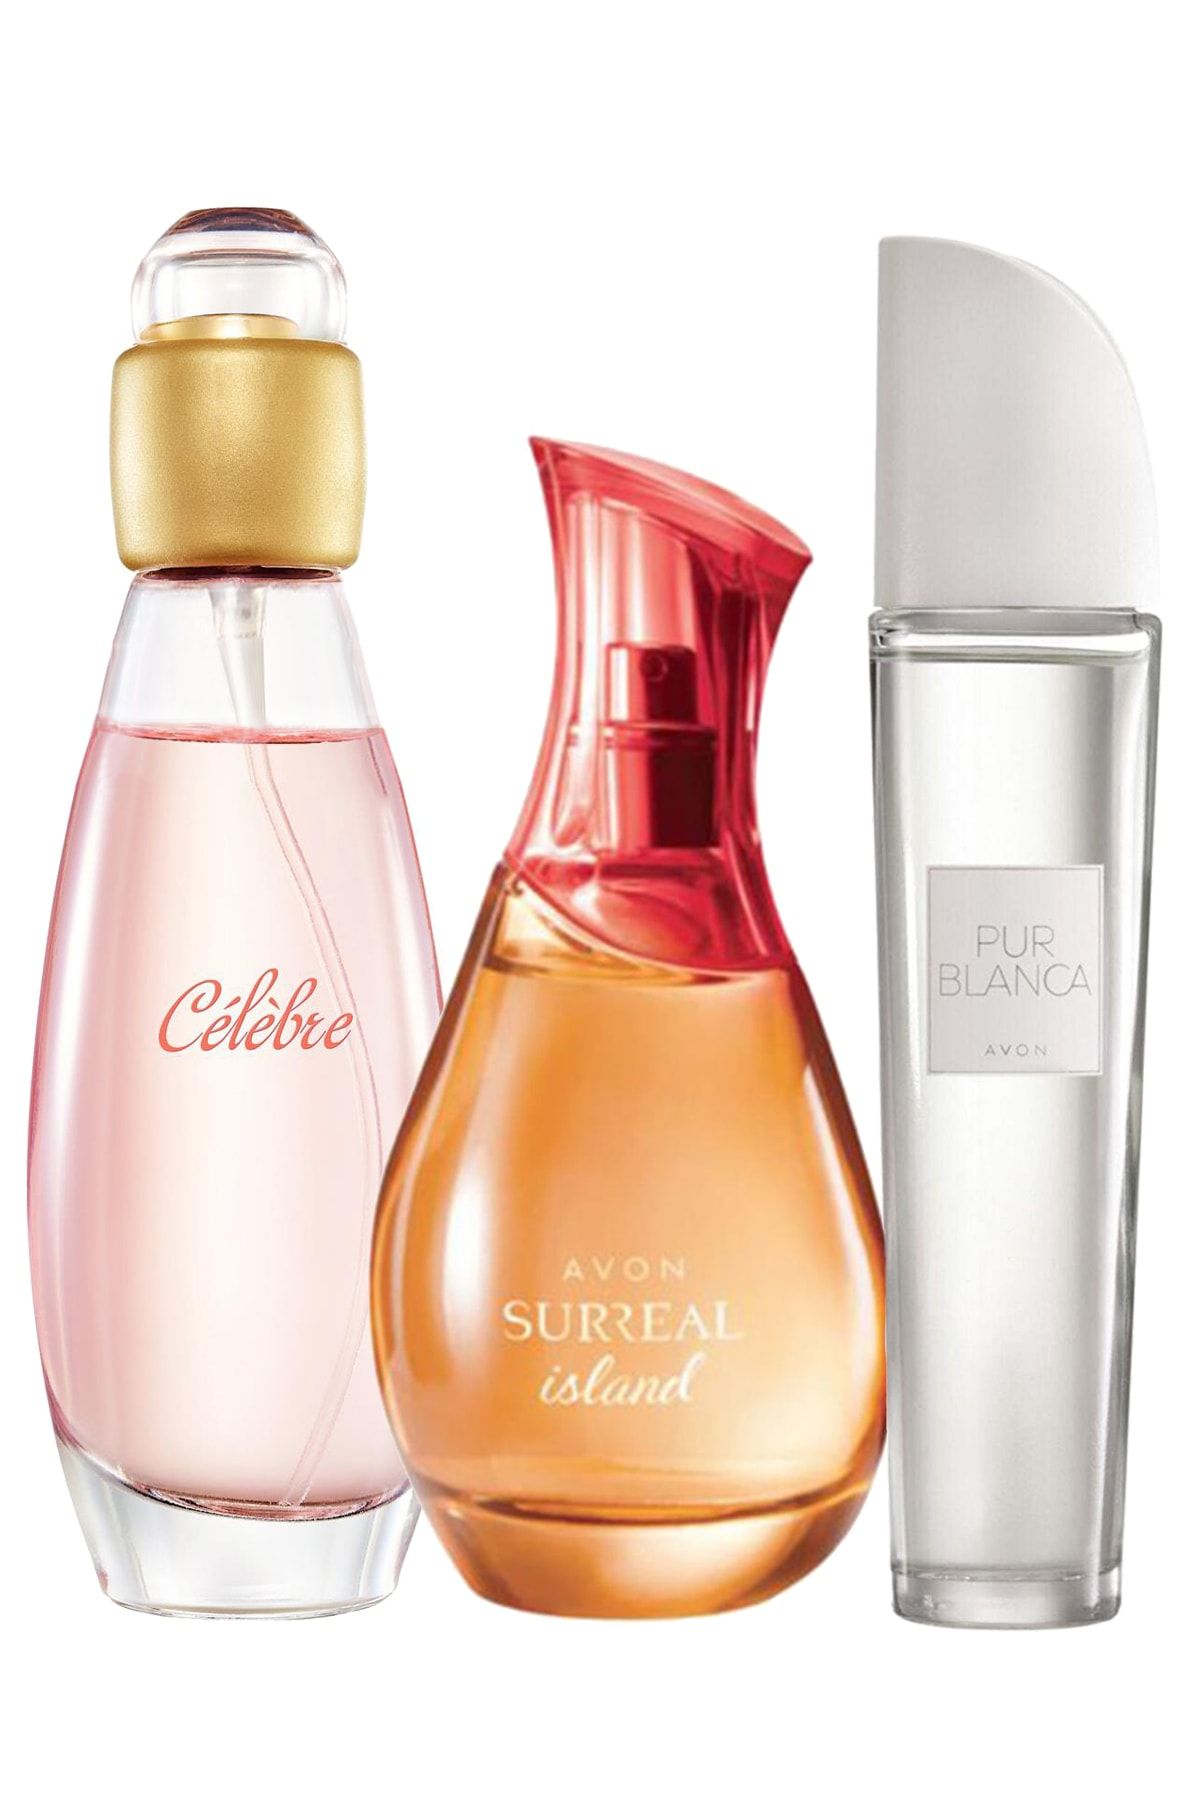 Avon Celebre Pur Blanca ve Surreal Island Kadın Parfüm Seti